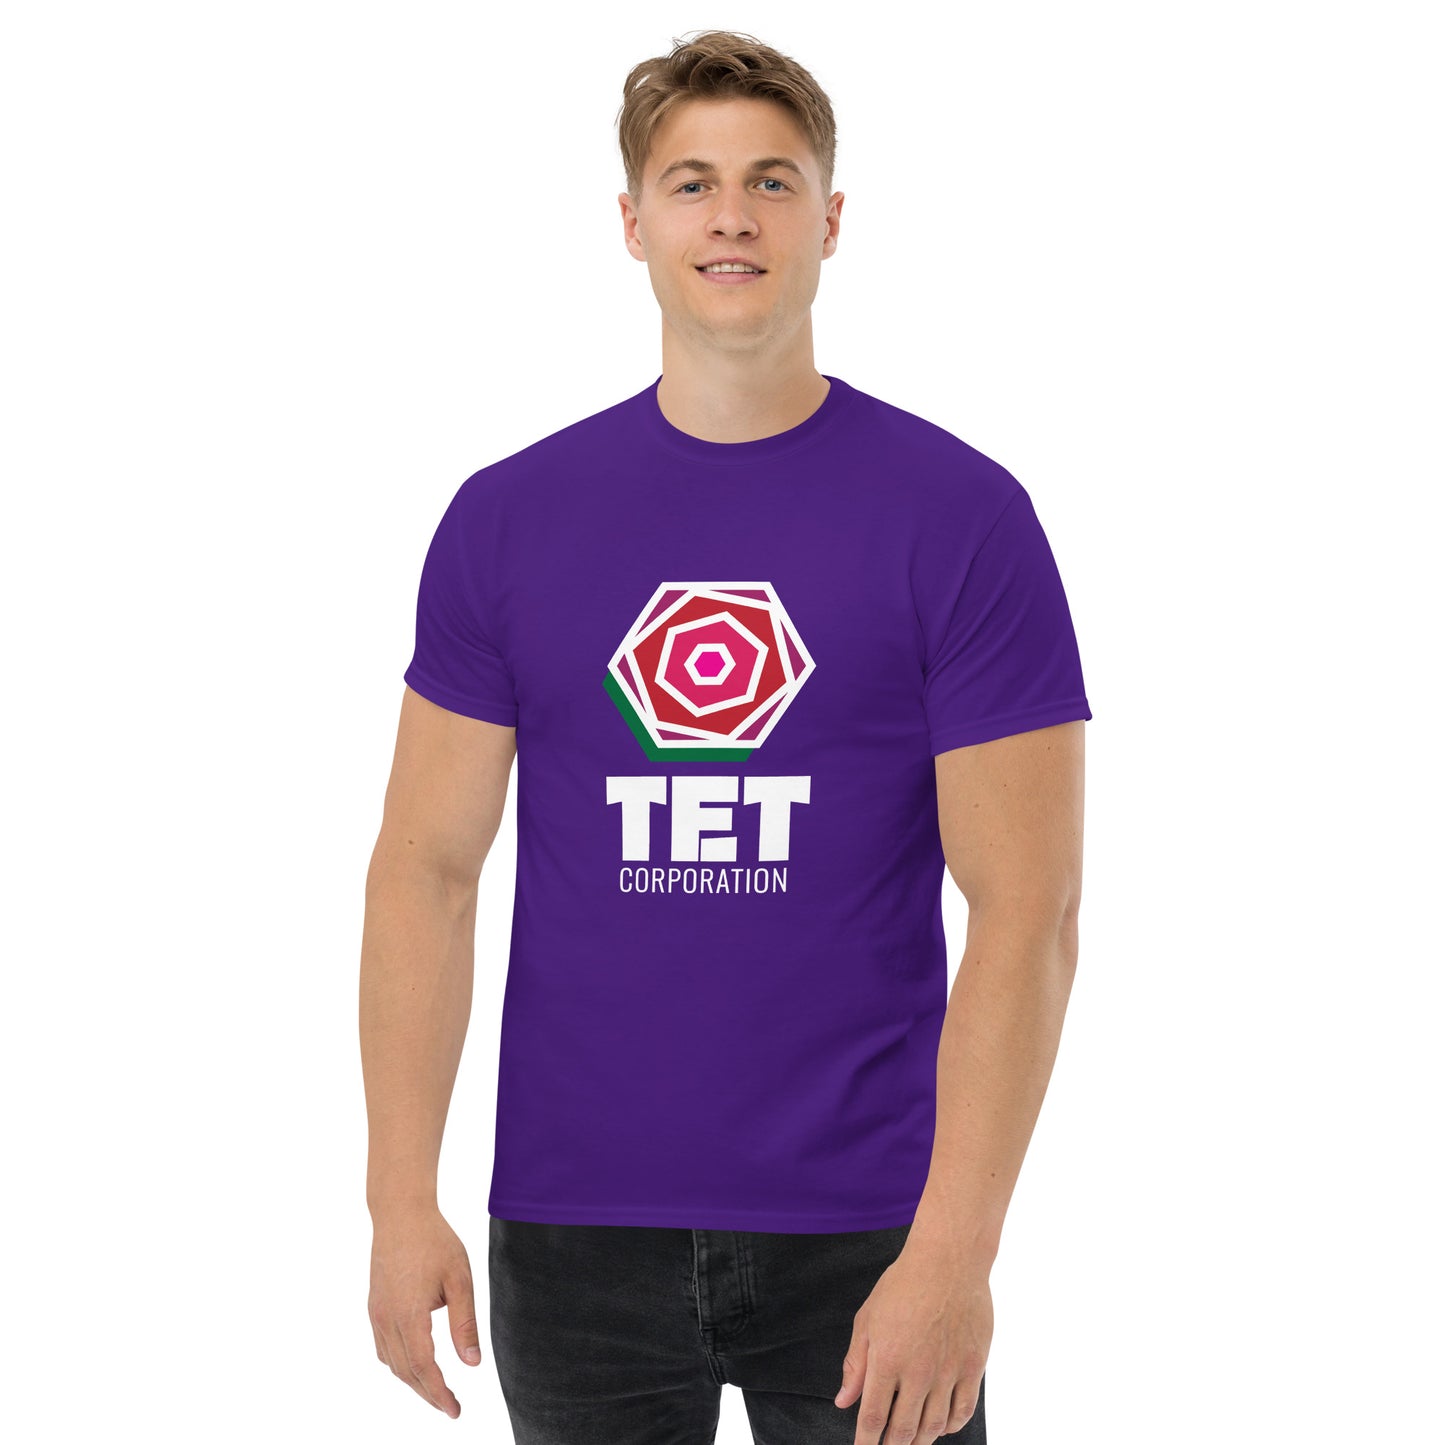 Tet Corporation T-Shirt, White Logo, Classic Fit